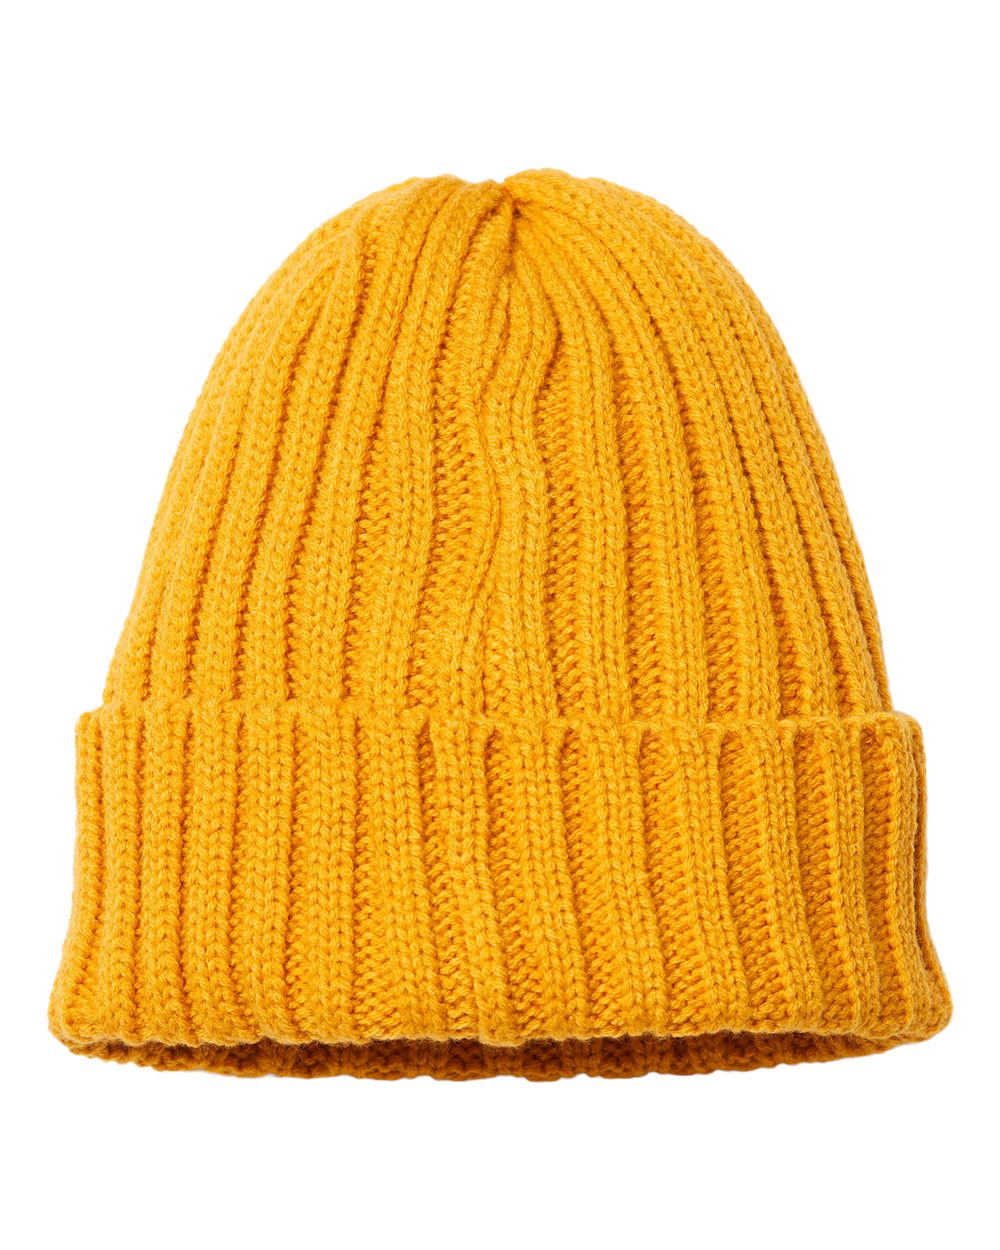 Front view of Atlantis Headwear SHORE custom hat in mustard yellow